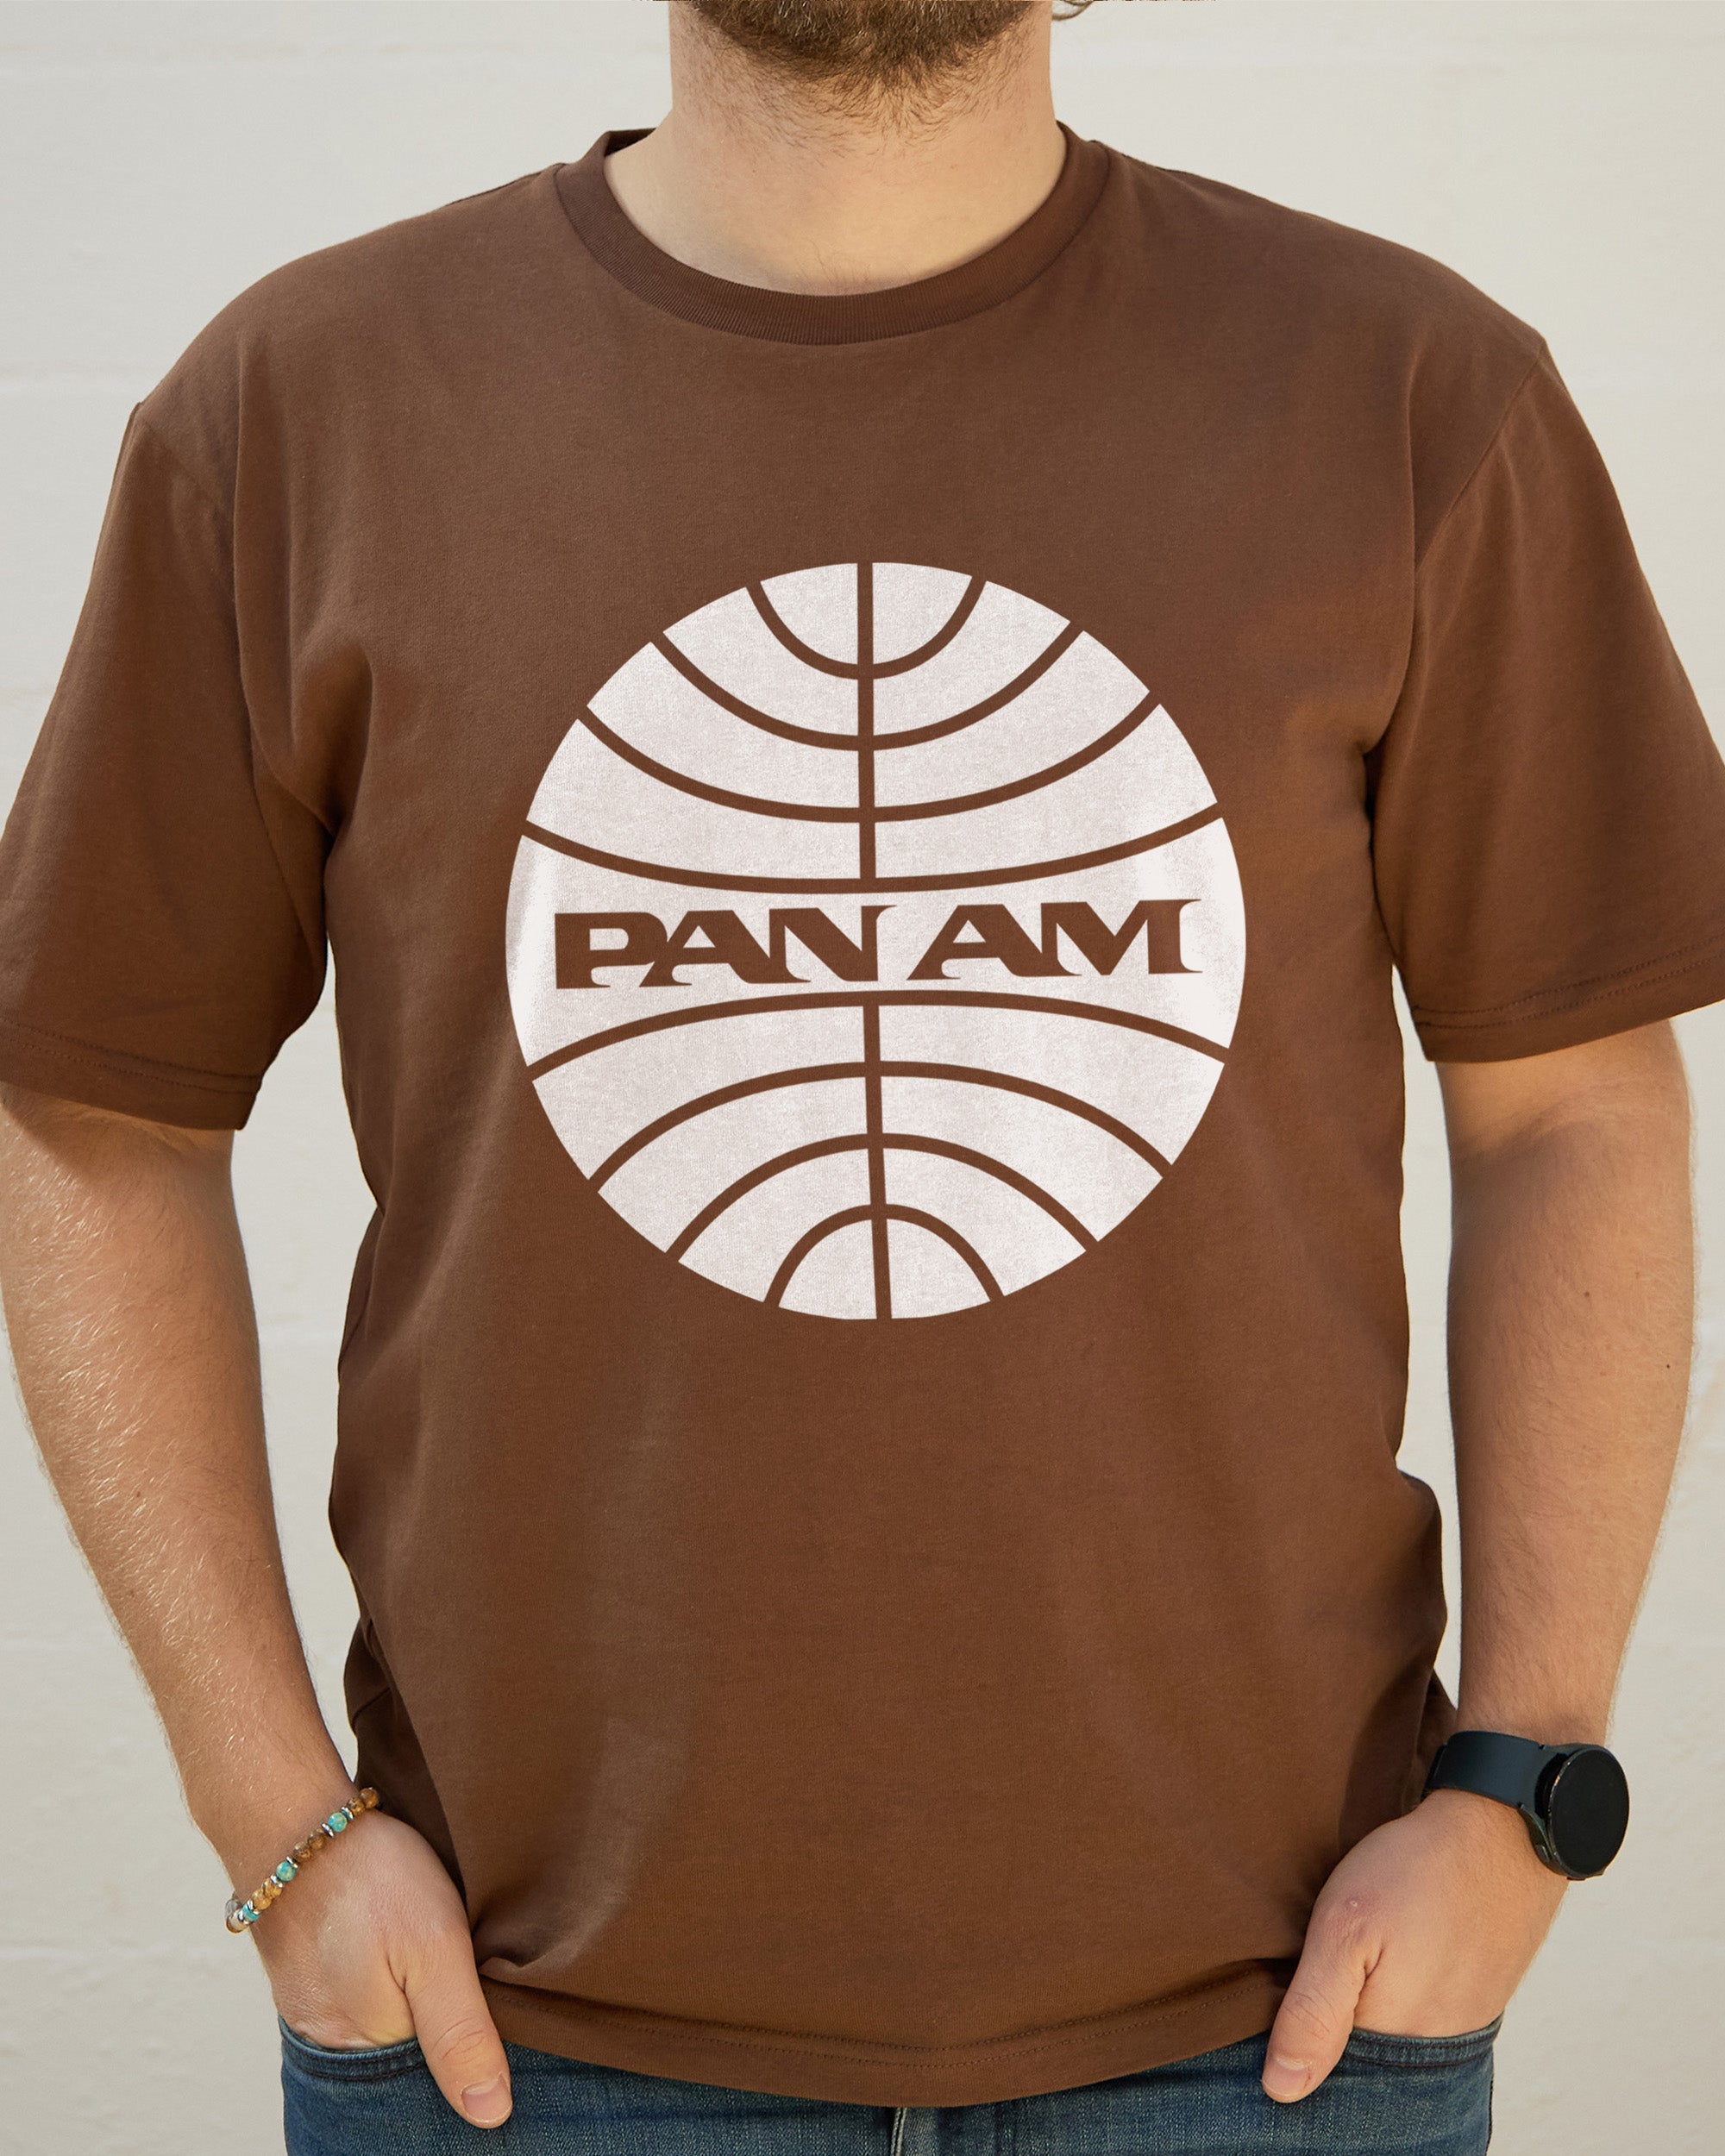 Pan Am T-Shirt Australia Online Brown